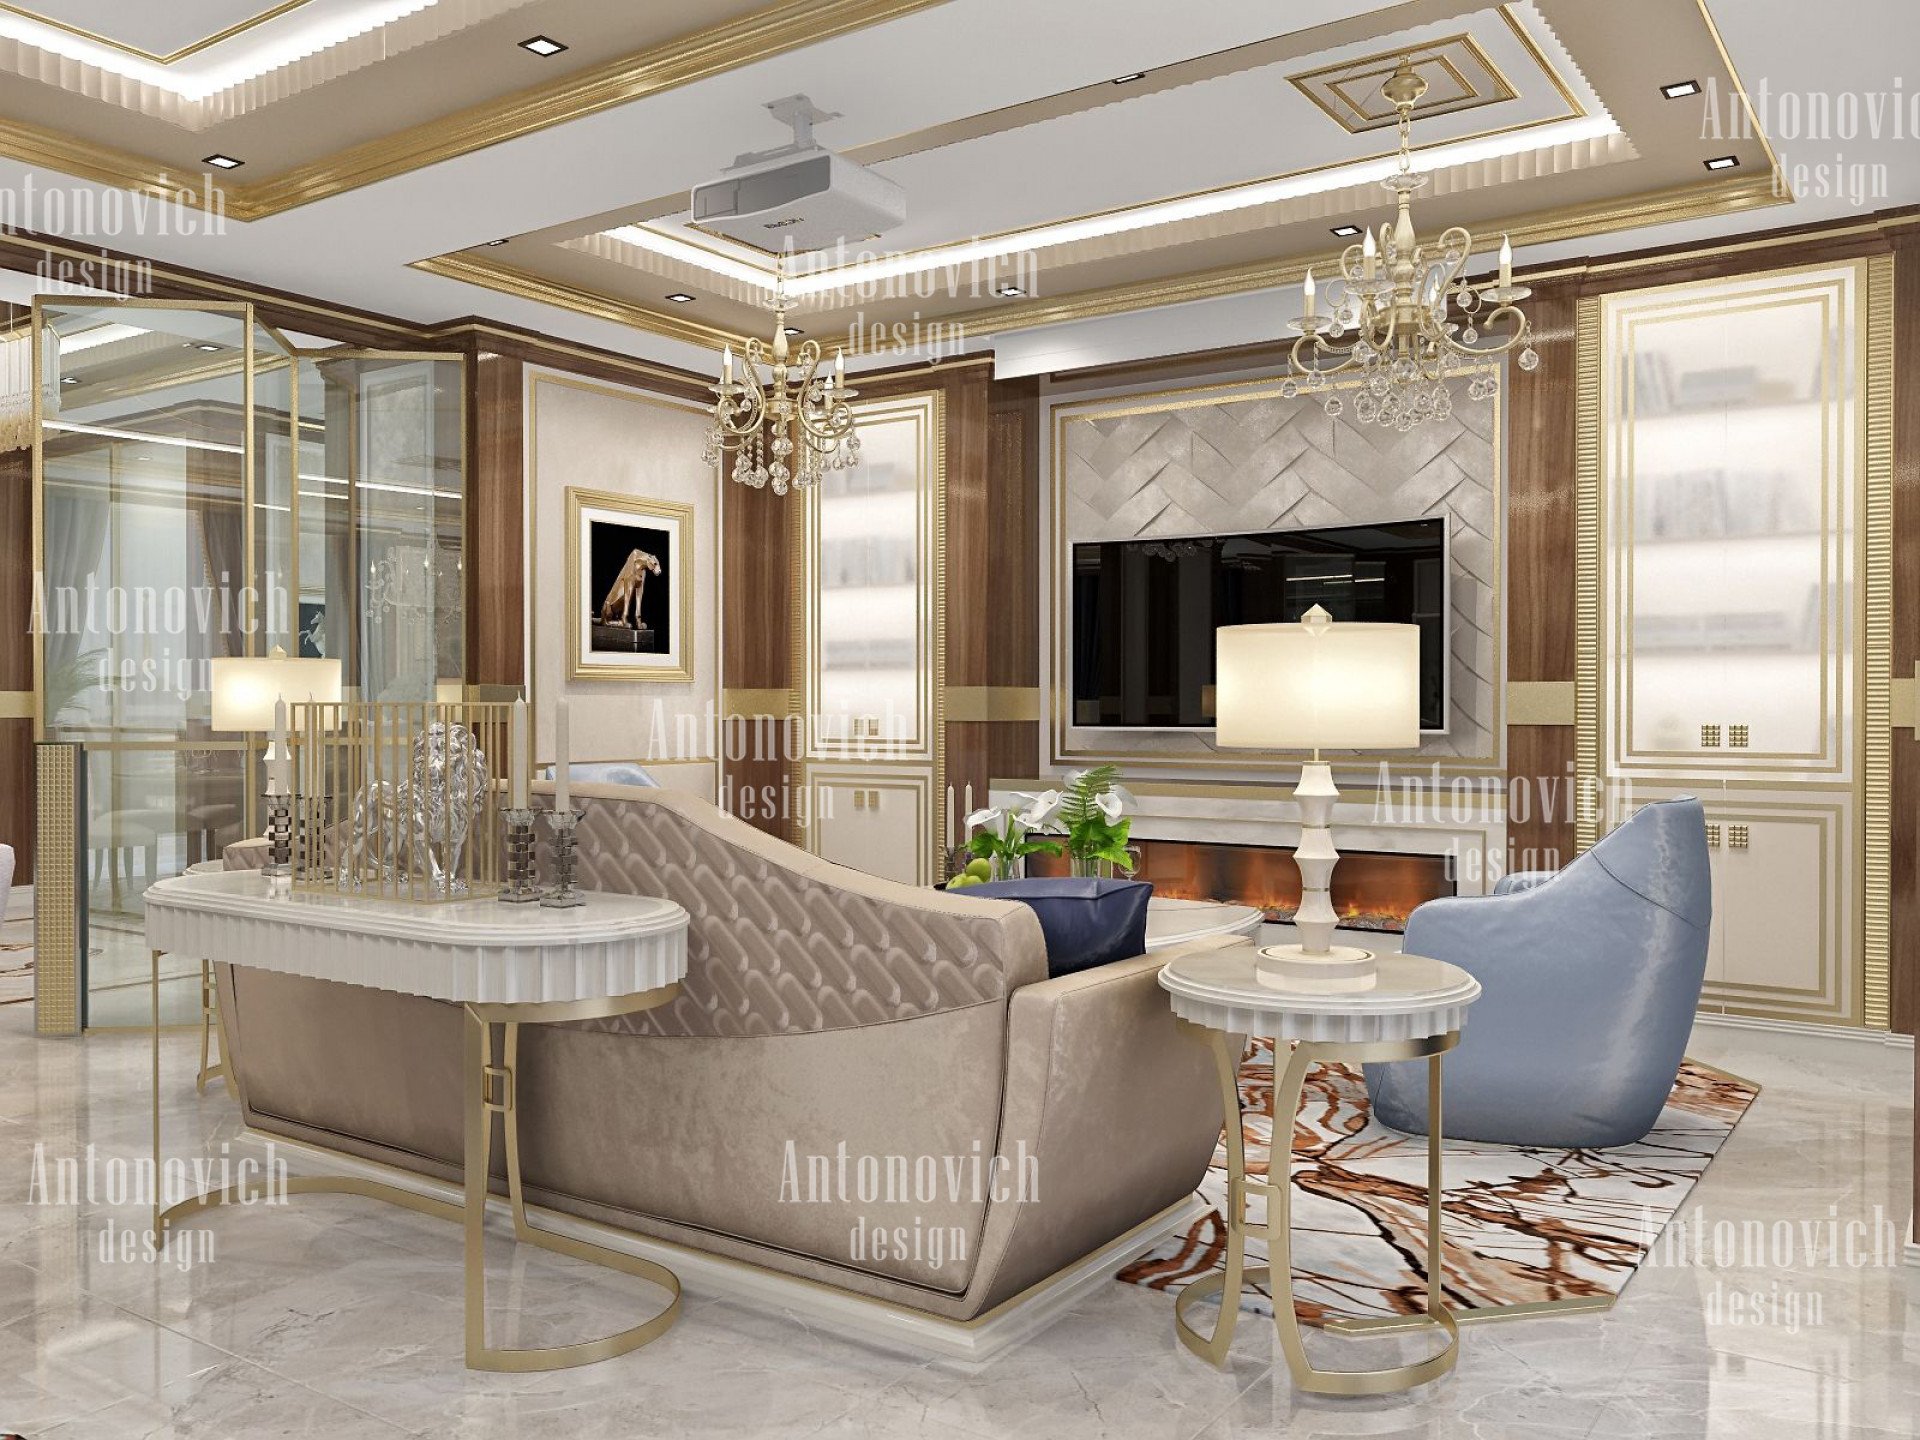 Interior Trends 2020 - Design Ideas - Luxury Antonovich ...